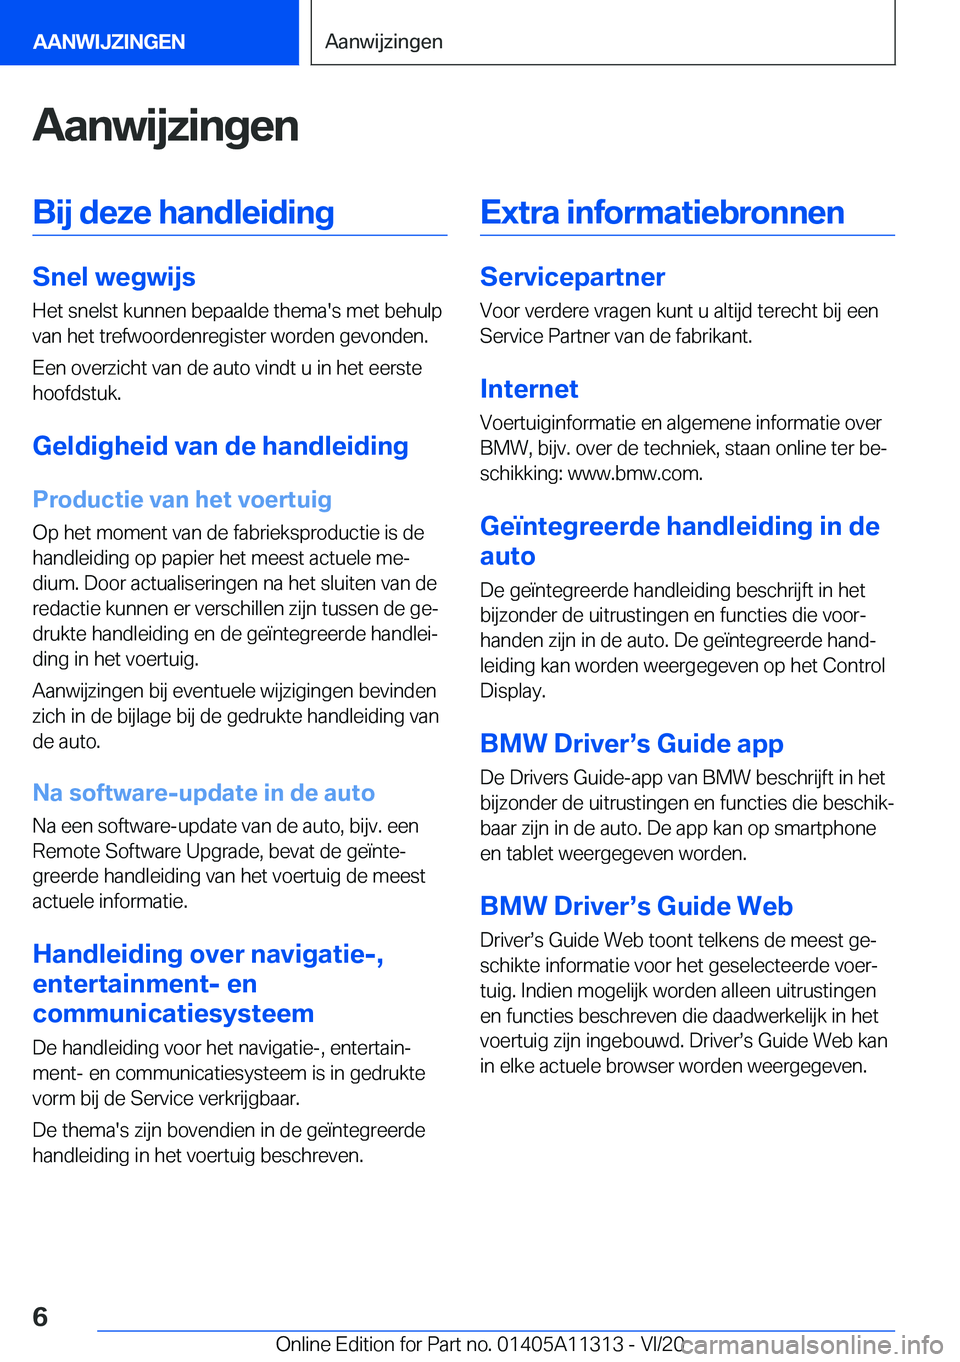 BMW 5 SERIES 2021  Instructieboekjes (in Dutch) �A�a�n�w�i�j�z�i�n�g�e�n�B�i�j��d�e�z�e��h�a�n�d�l�e�i�d�i�n�g
�S�n�e�l��w�e�g�w�i�j�s
�H�e�t��s�n�e�l�s�t��k�u�n�n�e�n��b�e�p�a�a�l�d�e��t�h�e�m�a�'�s��m�e�t��b�e�h�u�l�p
�v�a�n��h�e�t�